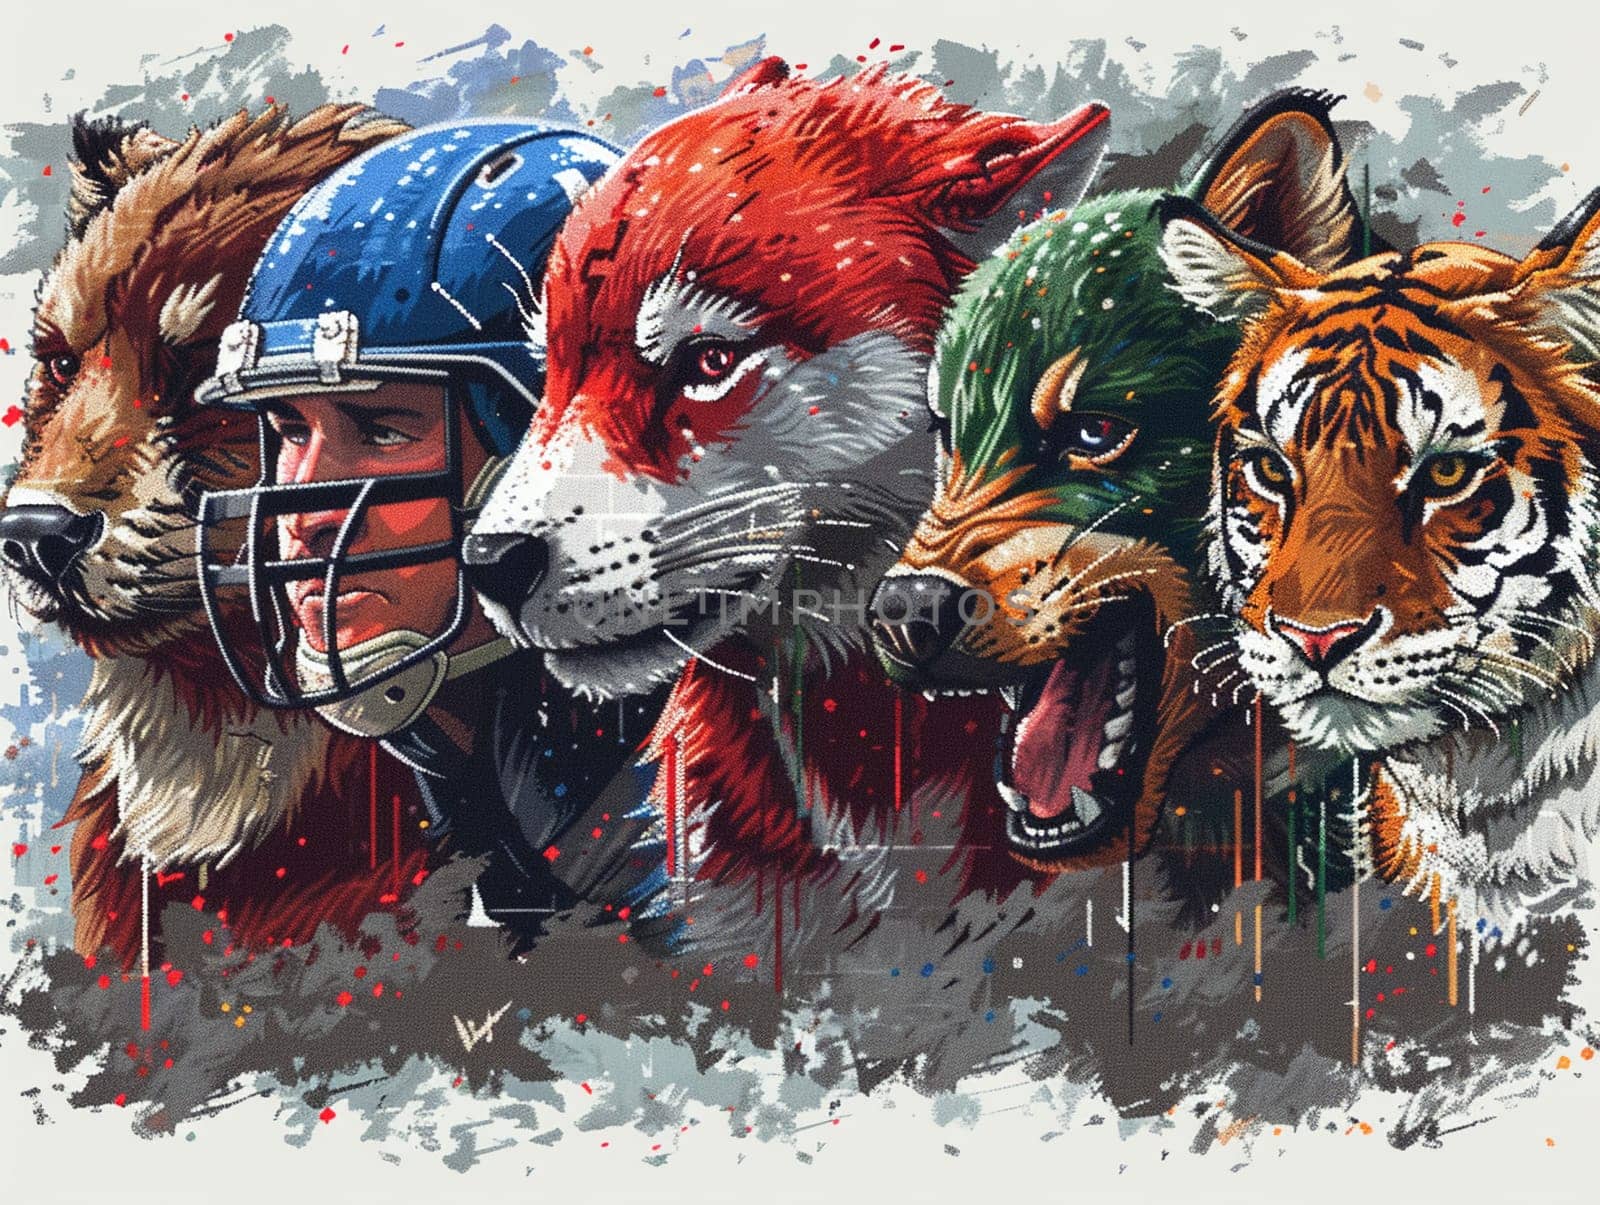 Pixel Art Sports Team Logos for a Fantasy League Mascots and emblems blur into digital fan art by Benzoix